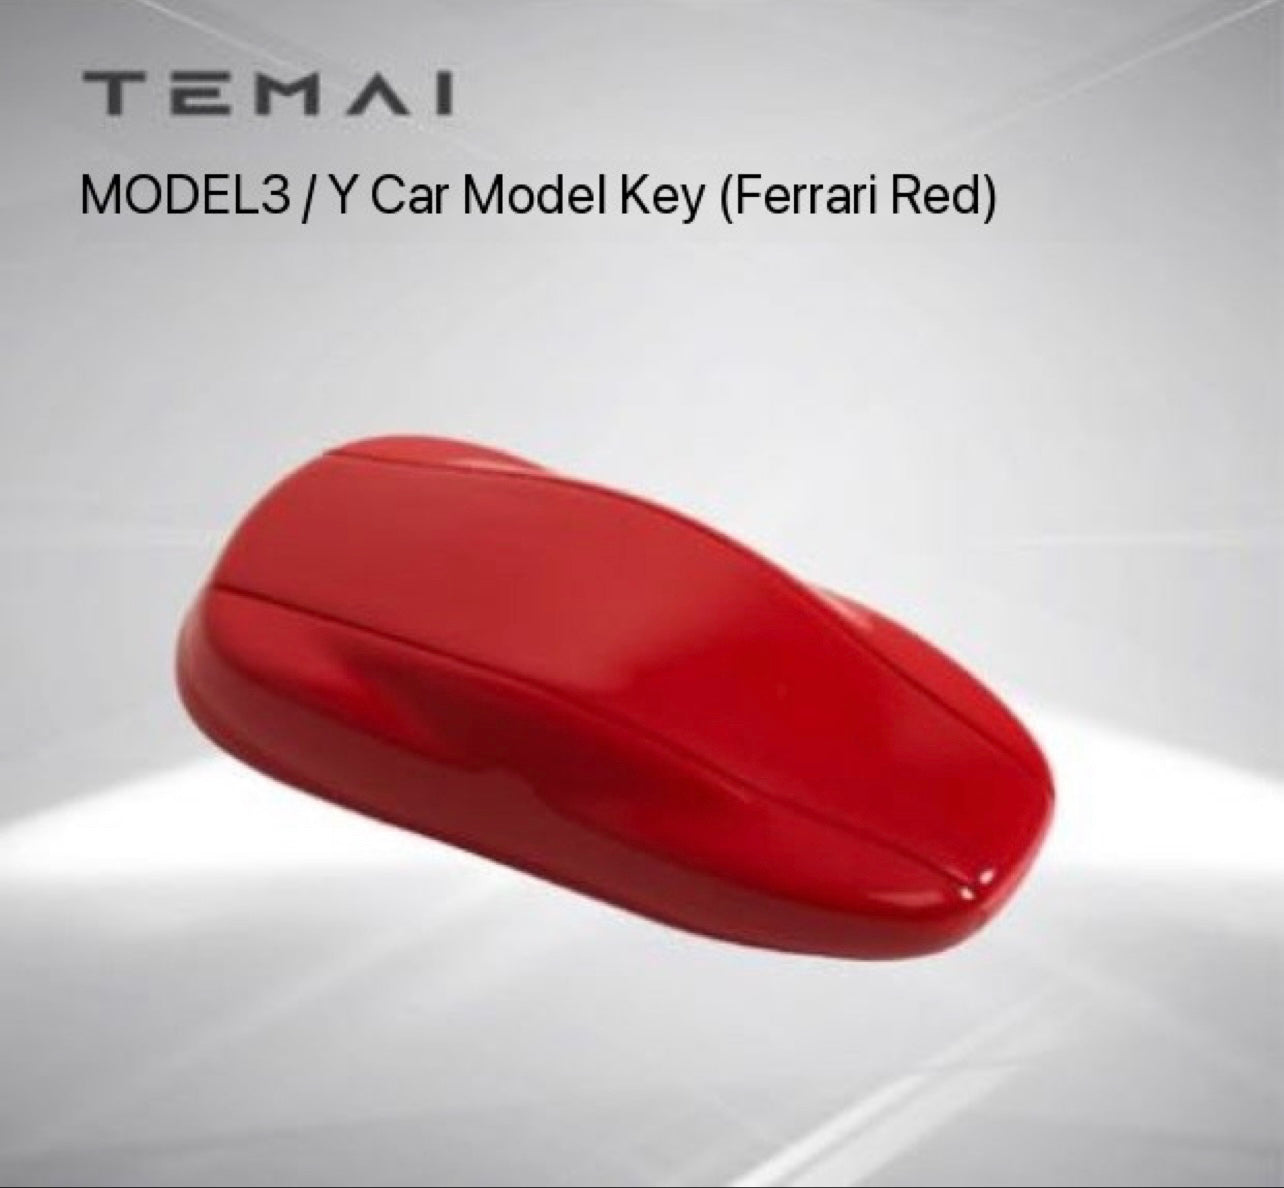 Temai Model 3/Y Smart Key work as the card